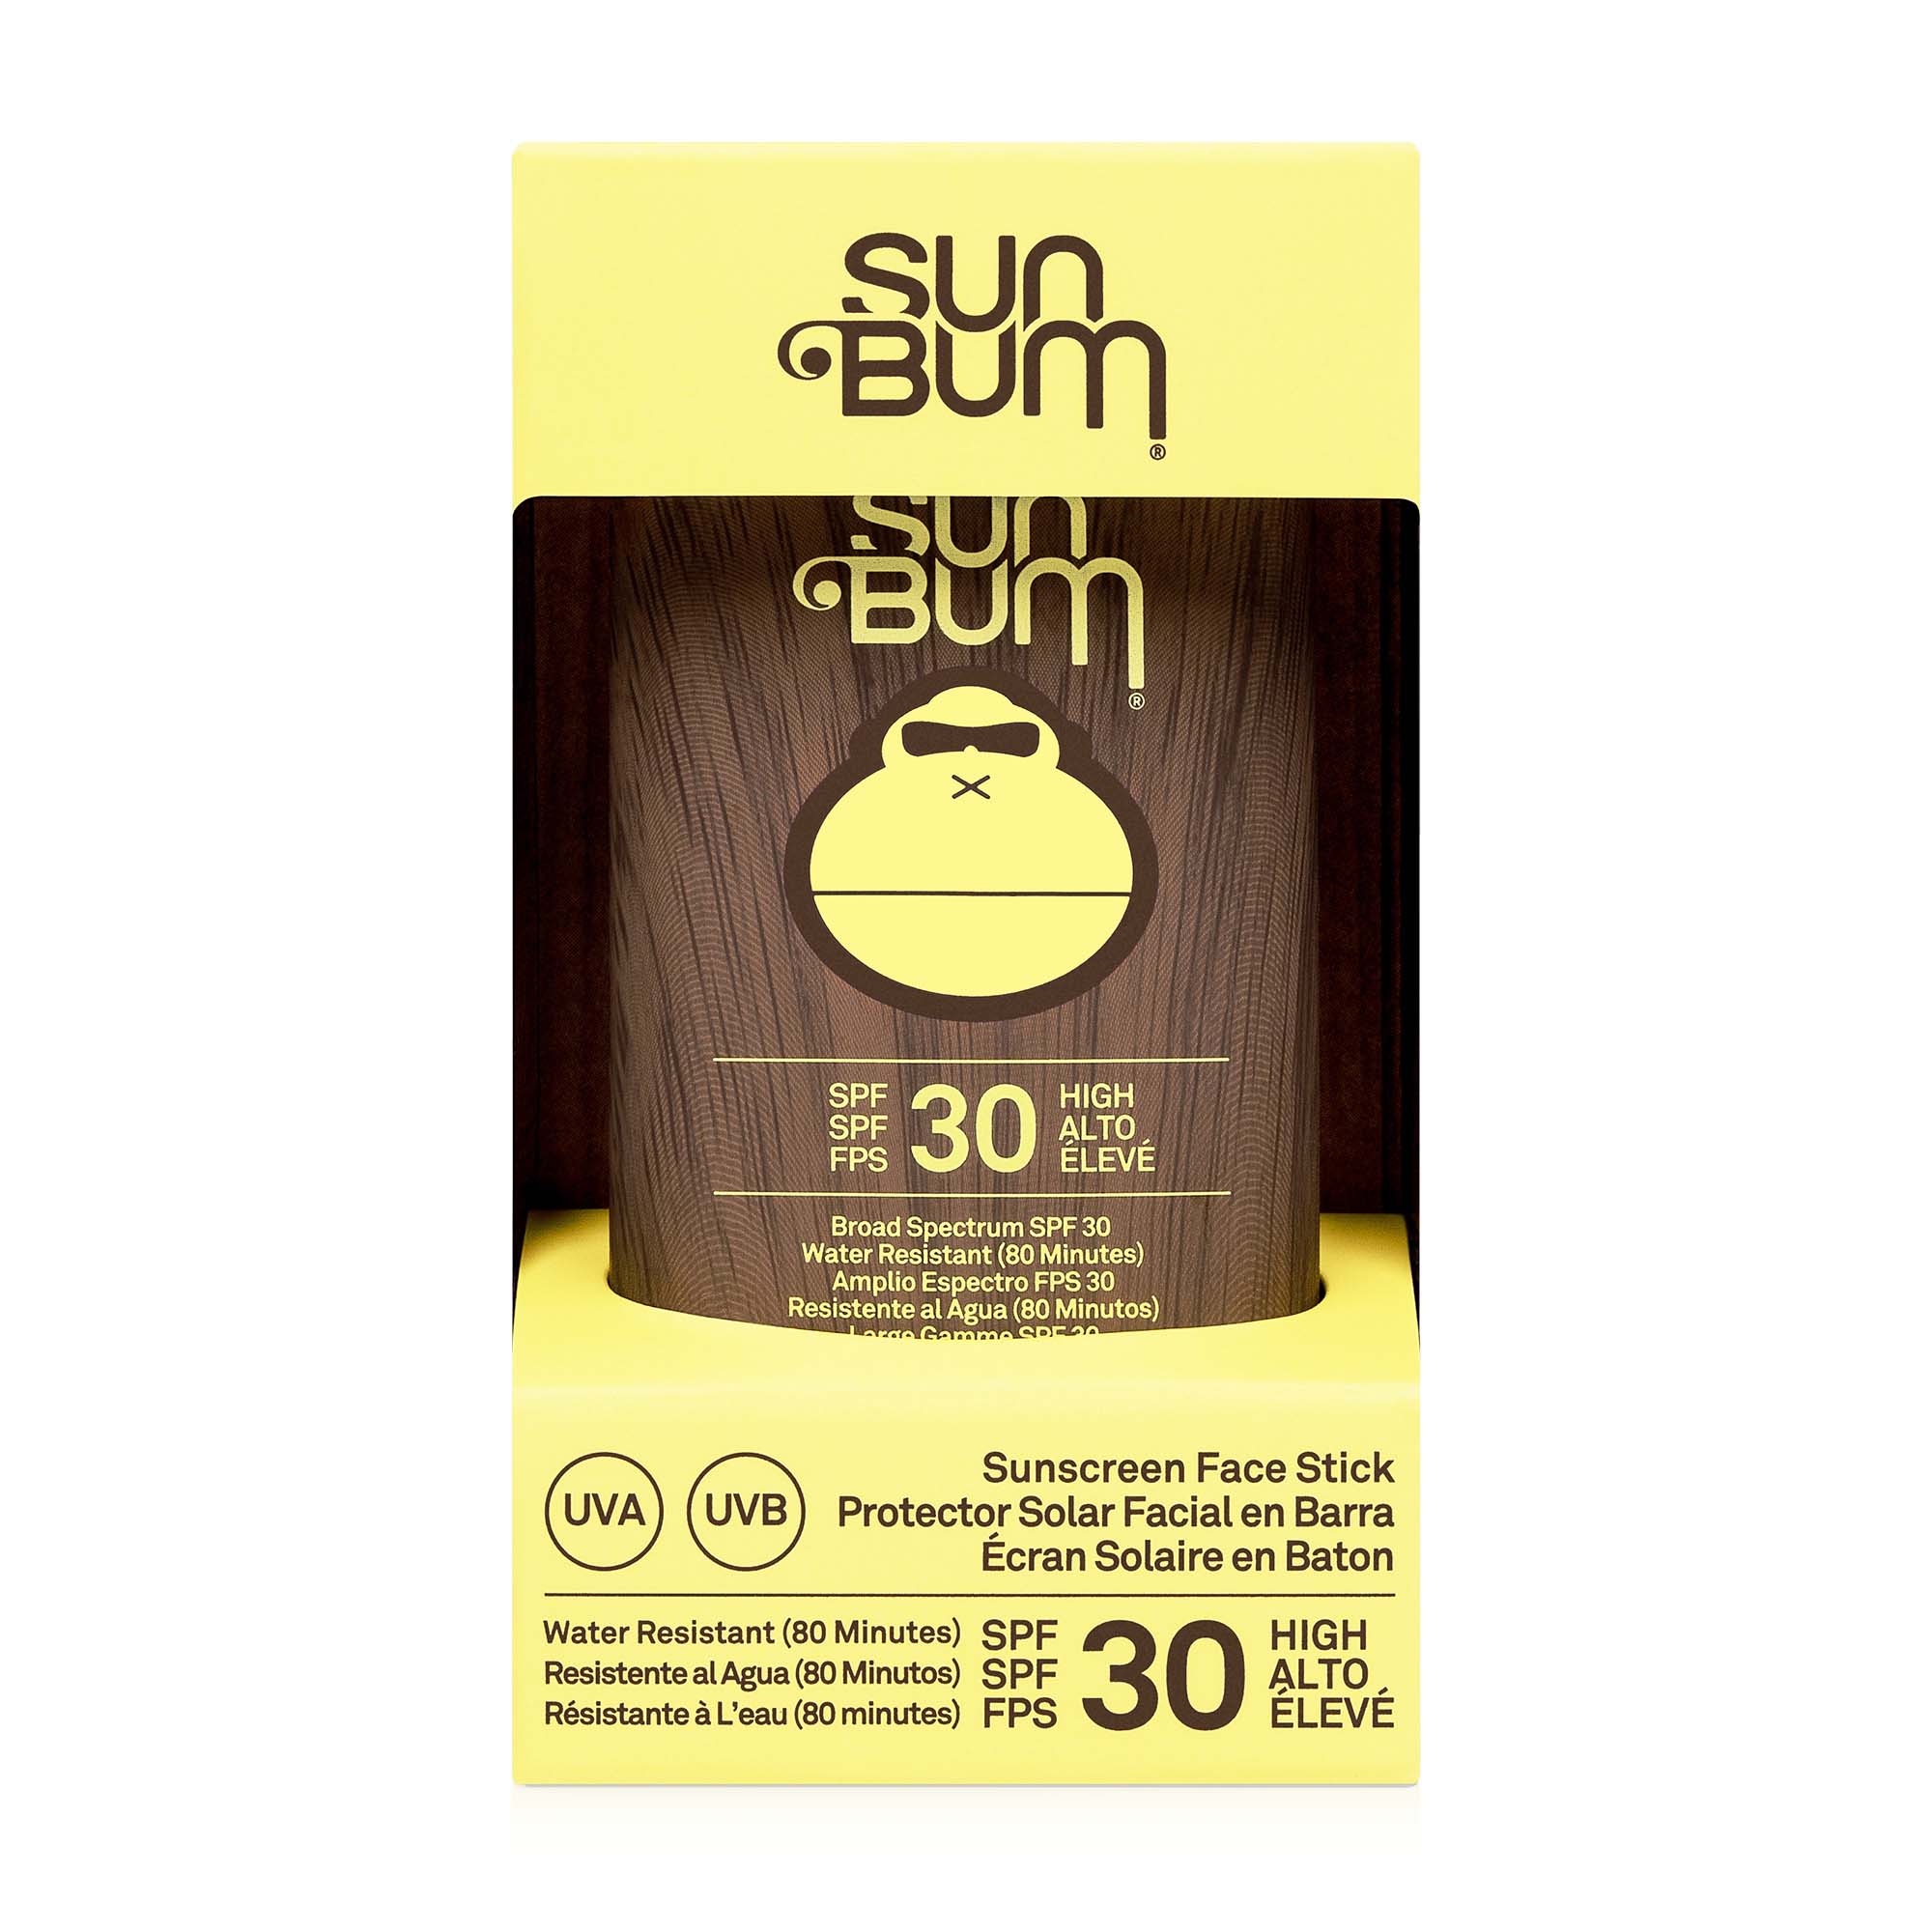 SUNBUM Original SPF 30 Sunscreen Face Stick